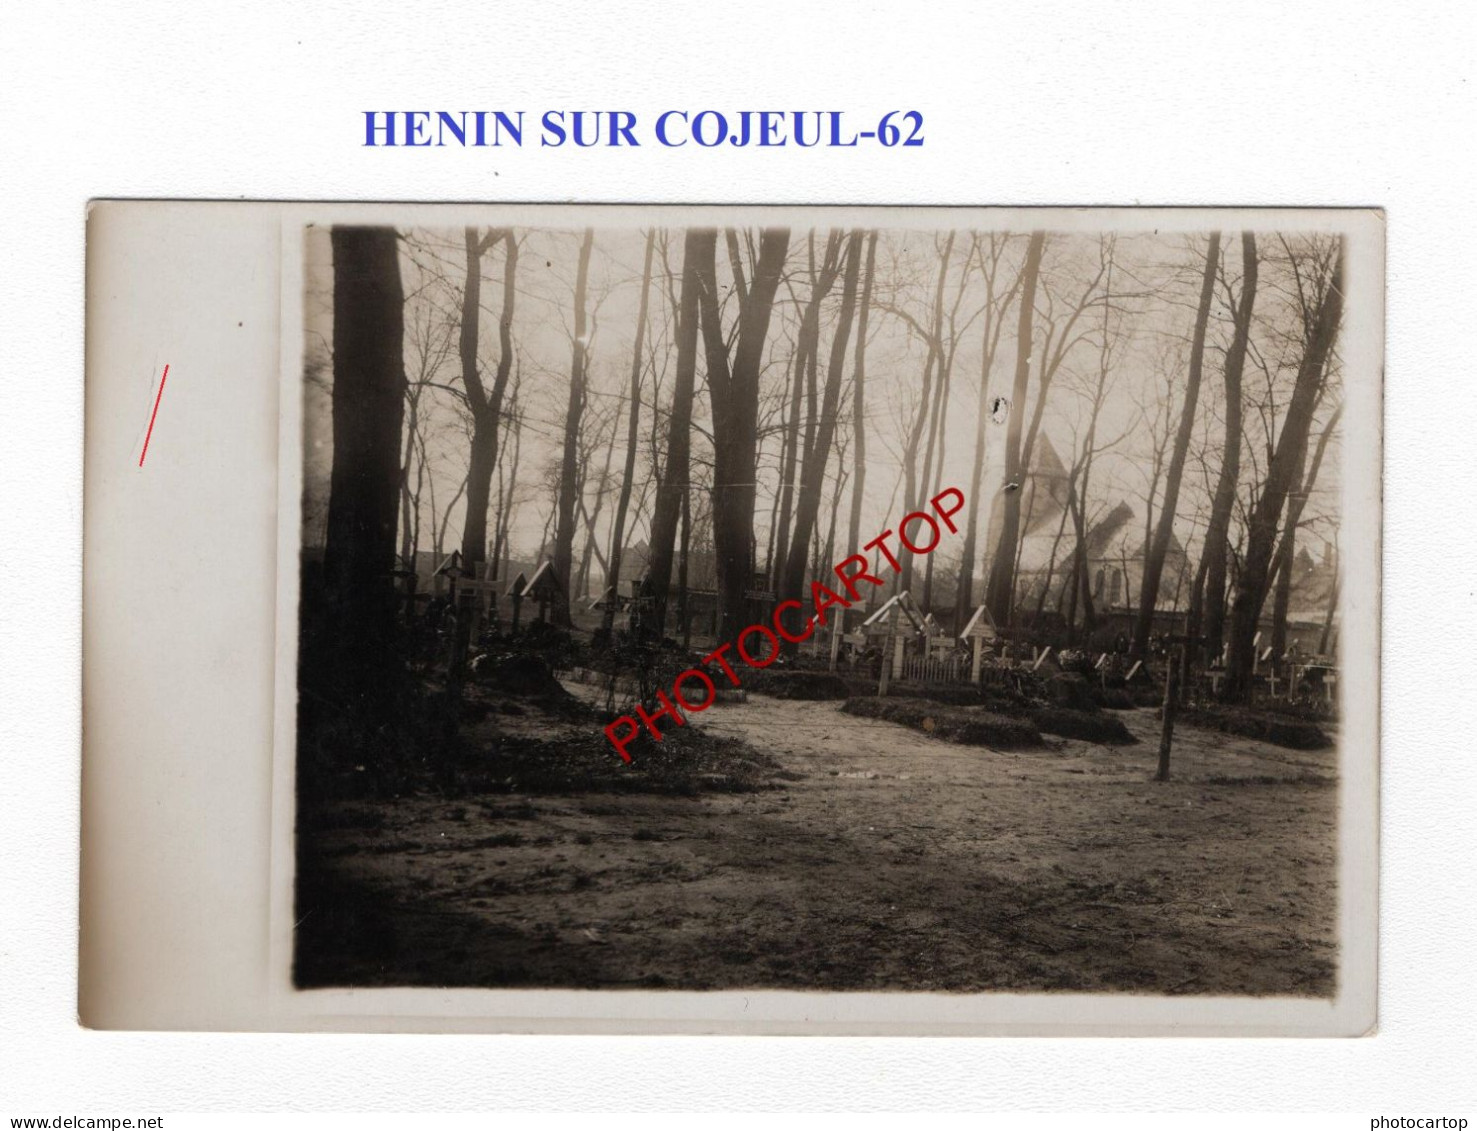 HENIN SUR COJEUL-62-Cimetiere-Tombes-CARTE PHOTO Allemande-GUERRE 14-18-1 WK-MILITARIA- - War Cemeteries